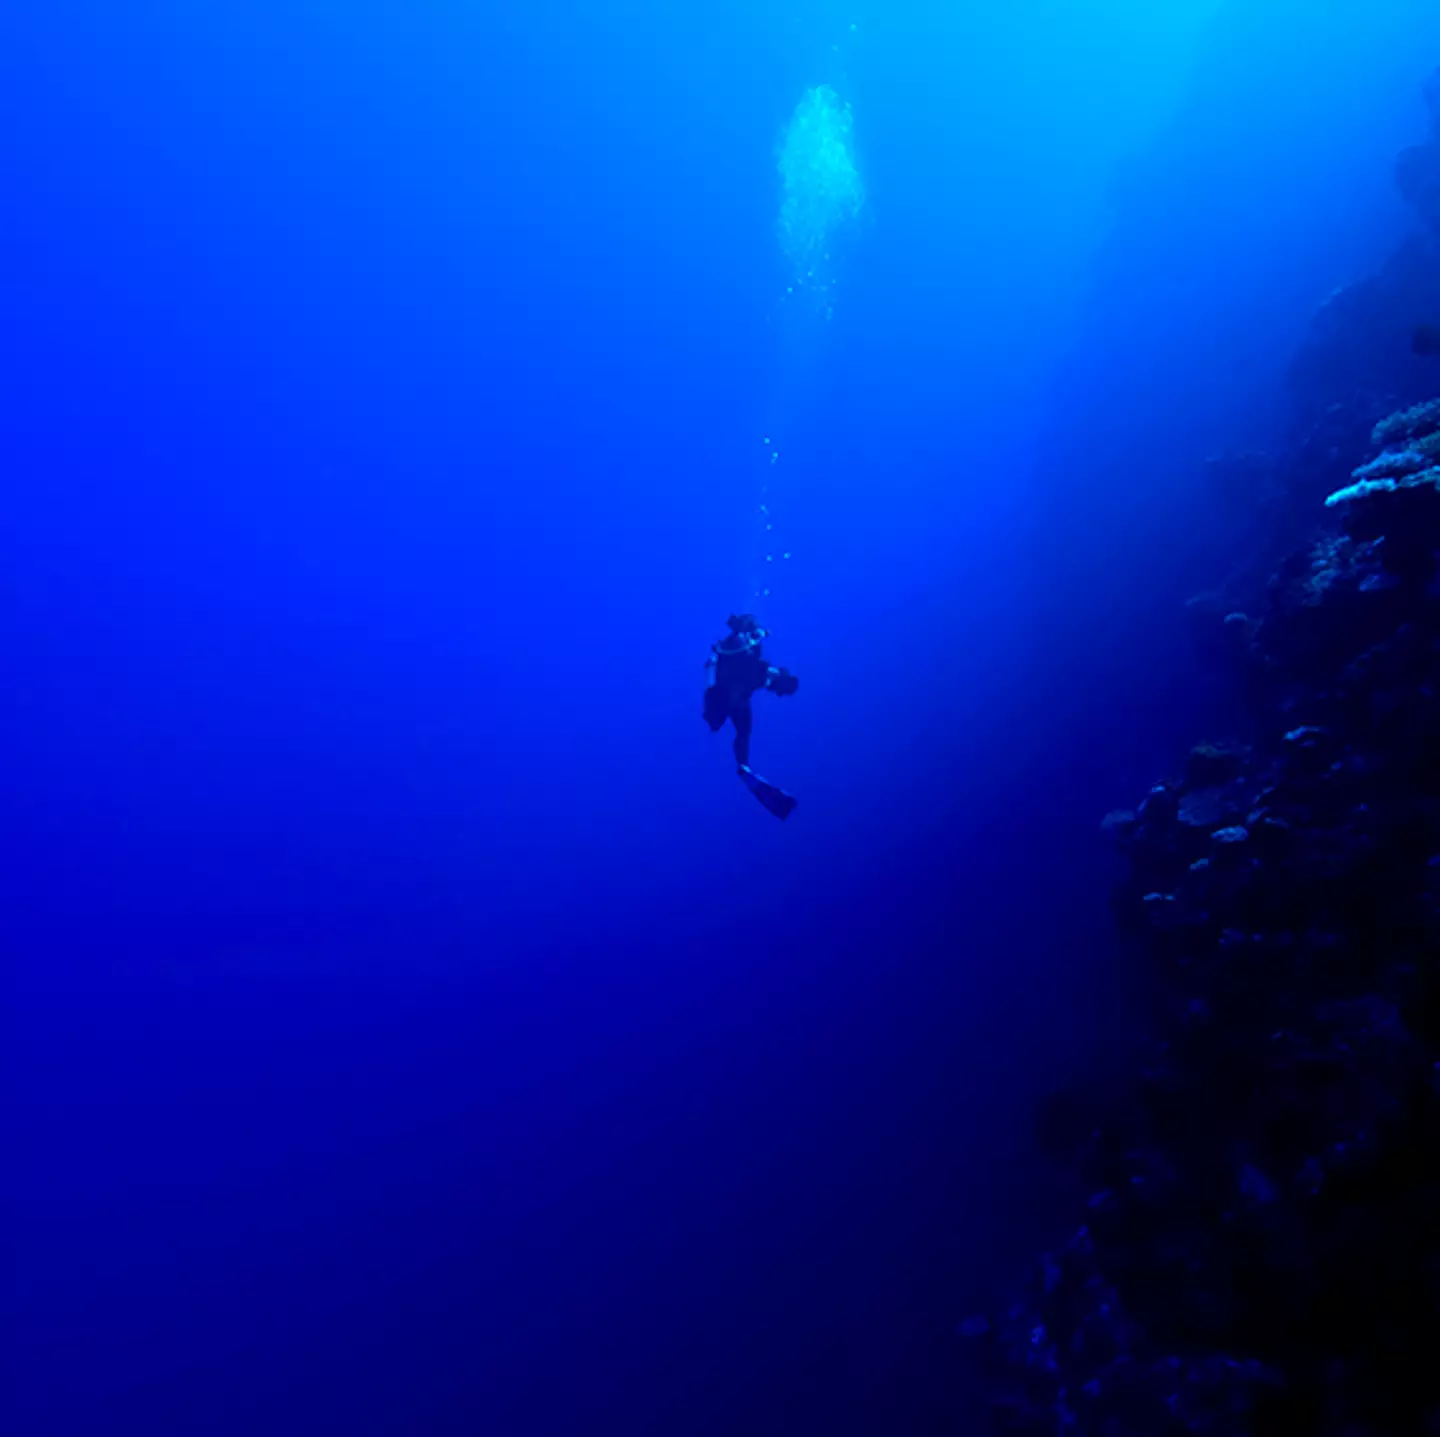 Unbelievable video showing sheer scale of ocean depth is giving people anxiety